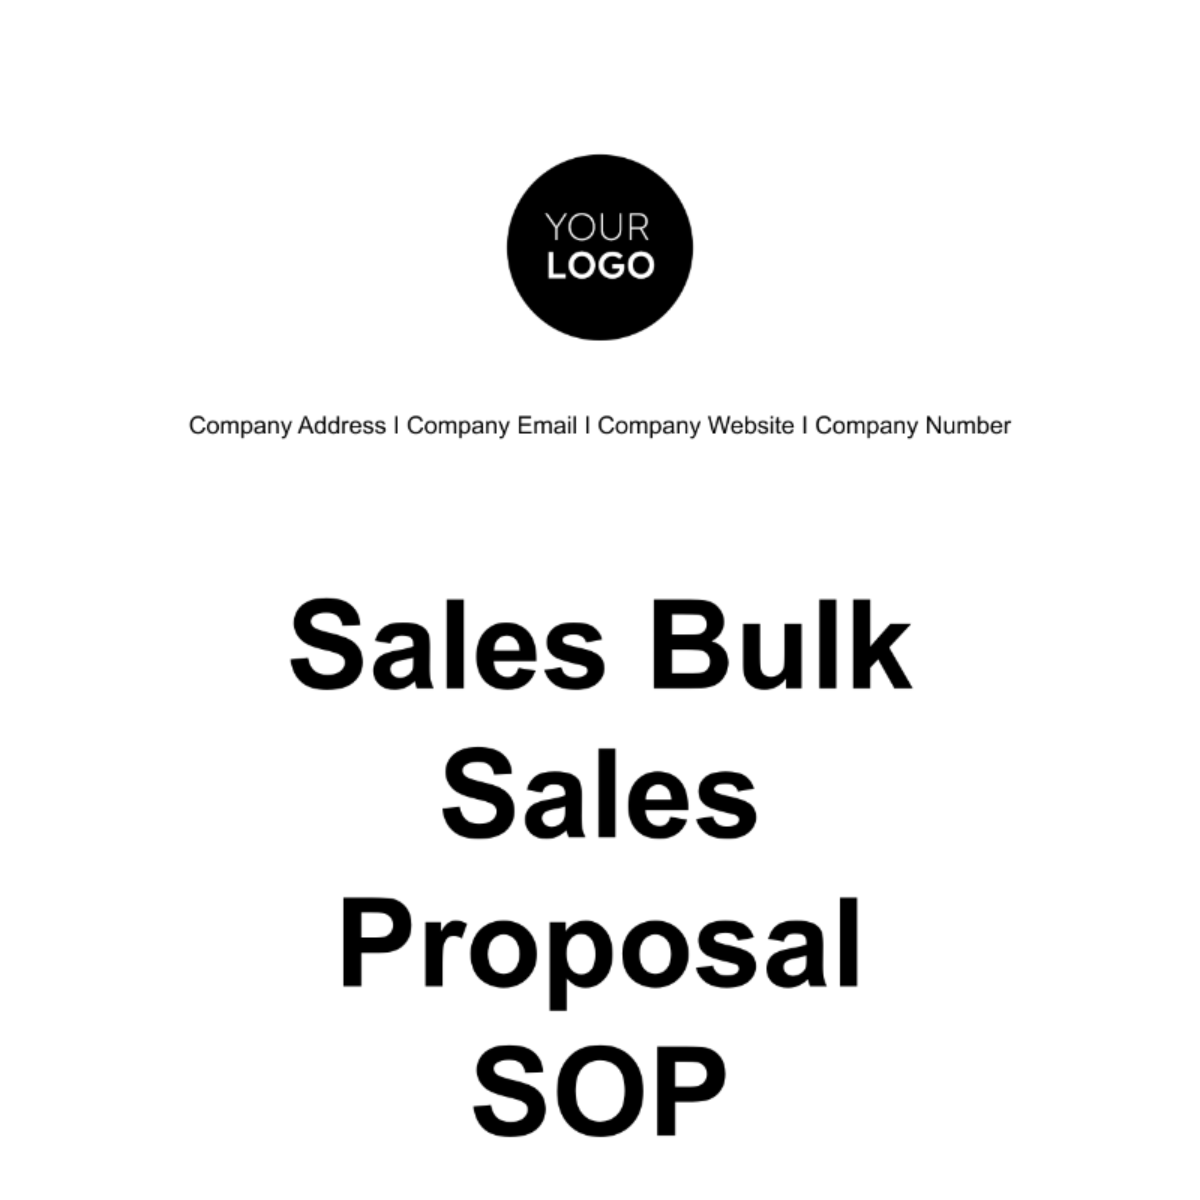 Sales Bulk Sales Proposal SOP Template